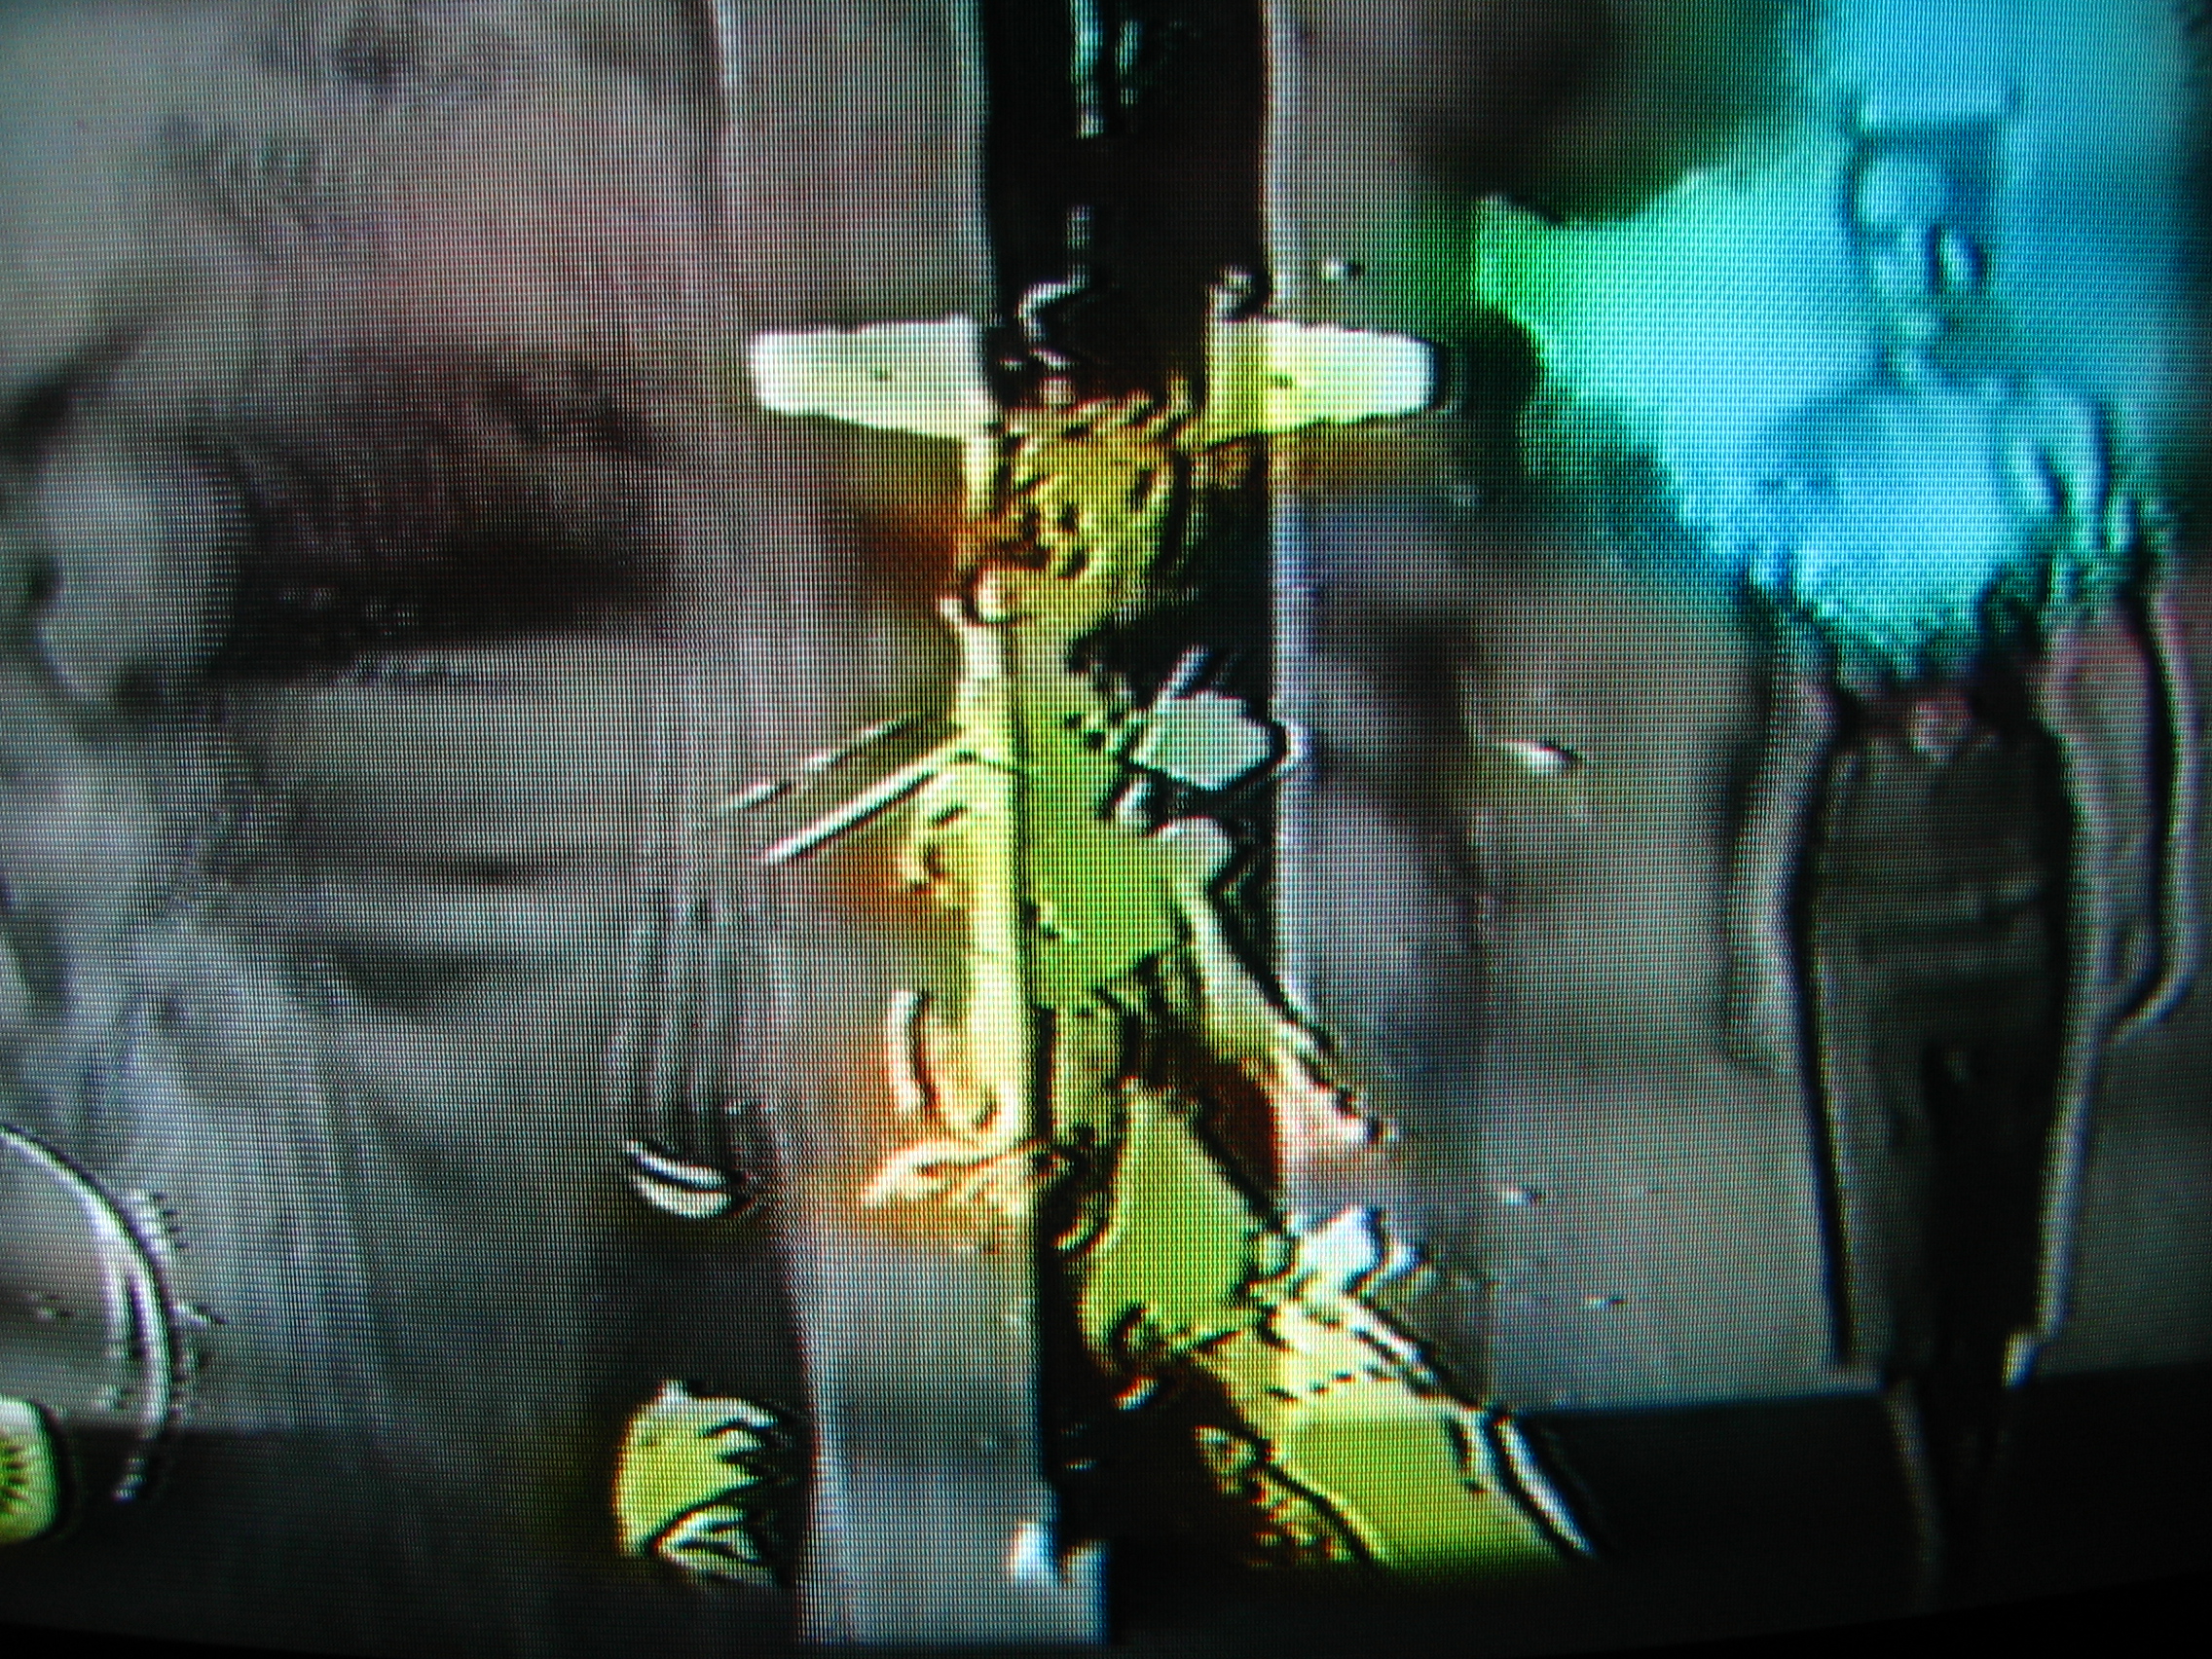 BOOKHEADS Video Still, 1-Channel U-Matic Video Tape, Aix-en-Pve France 1994